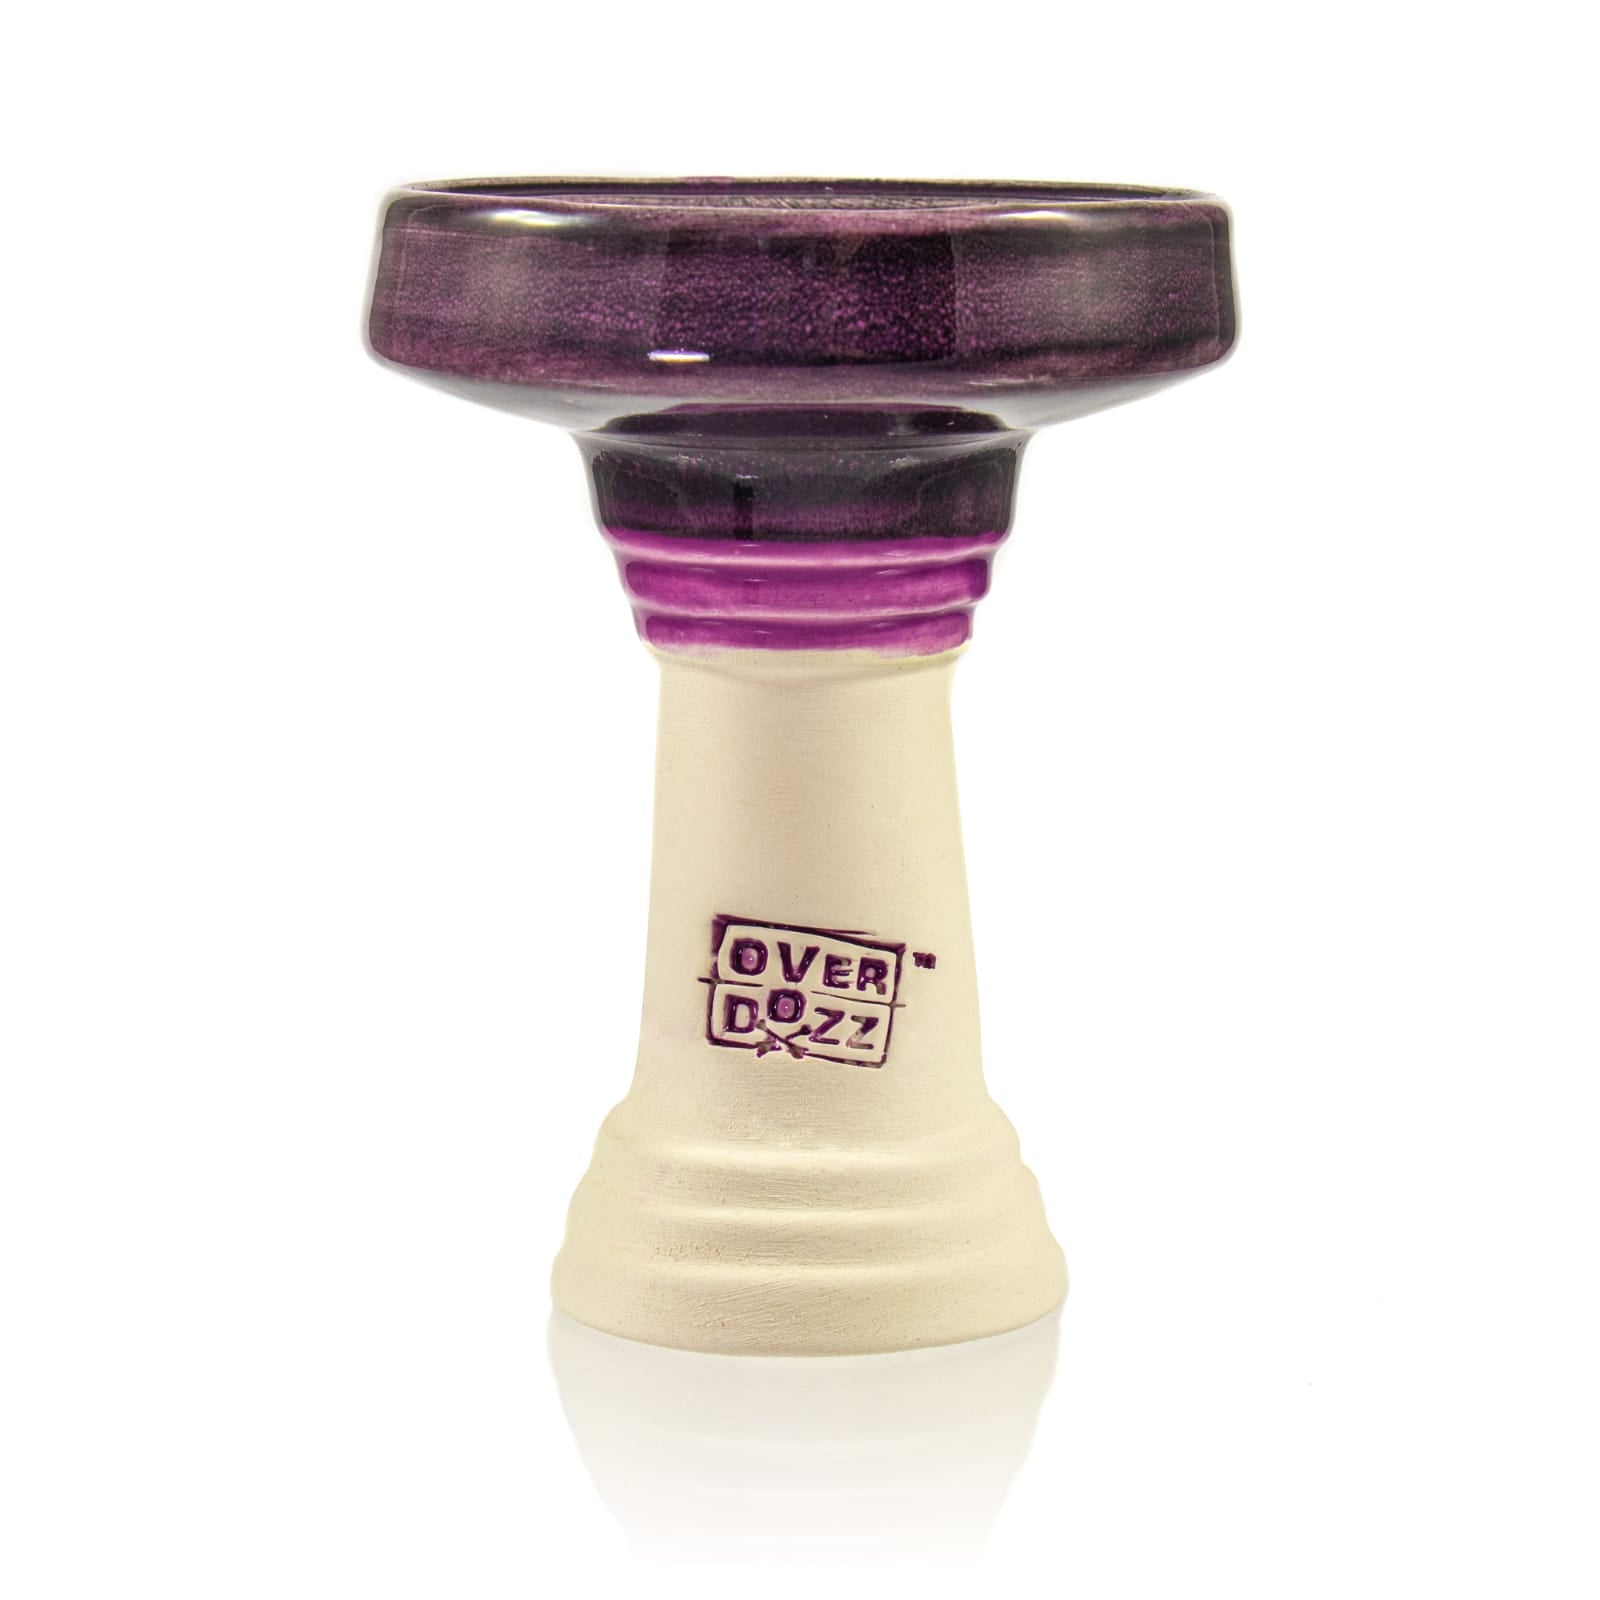 Overdozz Premium Phunnel Bowl G1 (Starbuzz Nar Compatible) - Purple Over White Clay